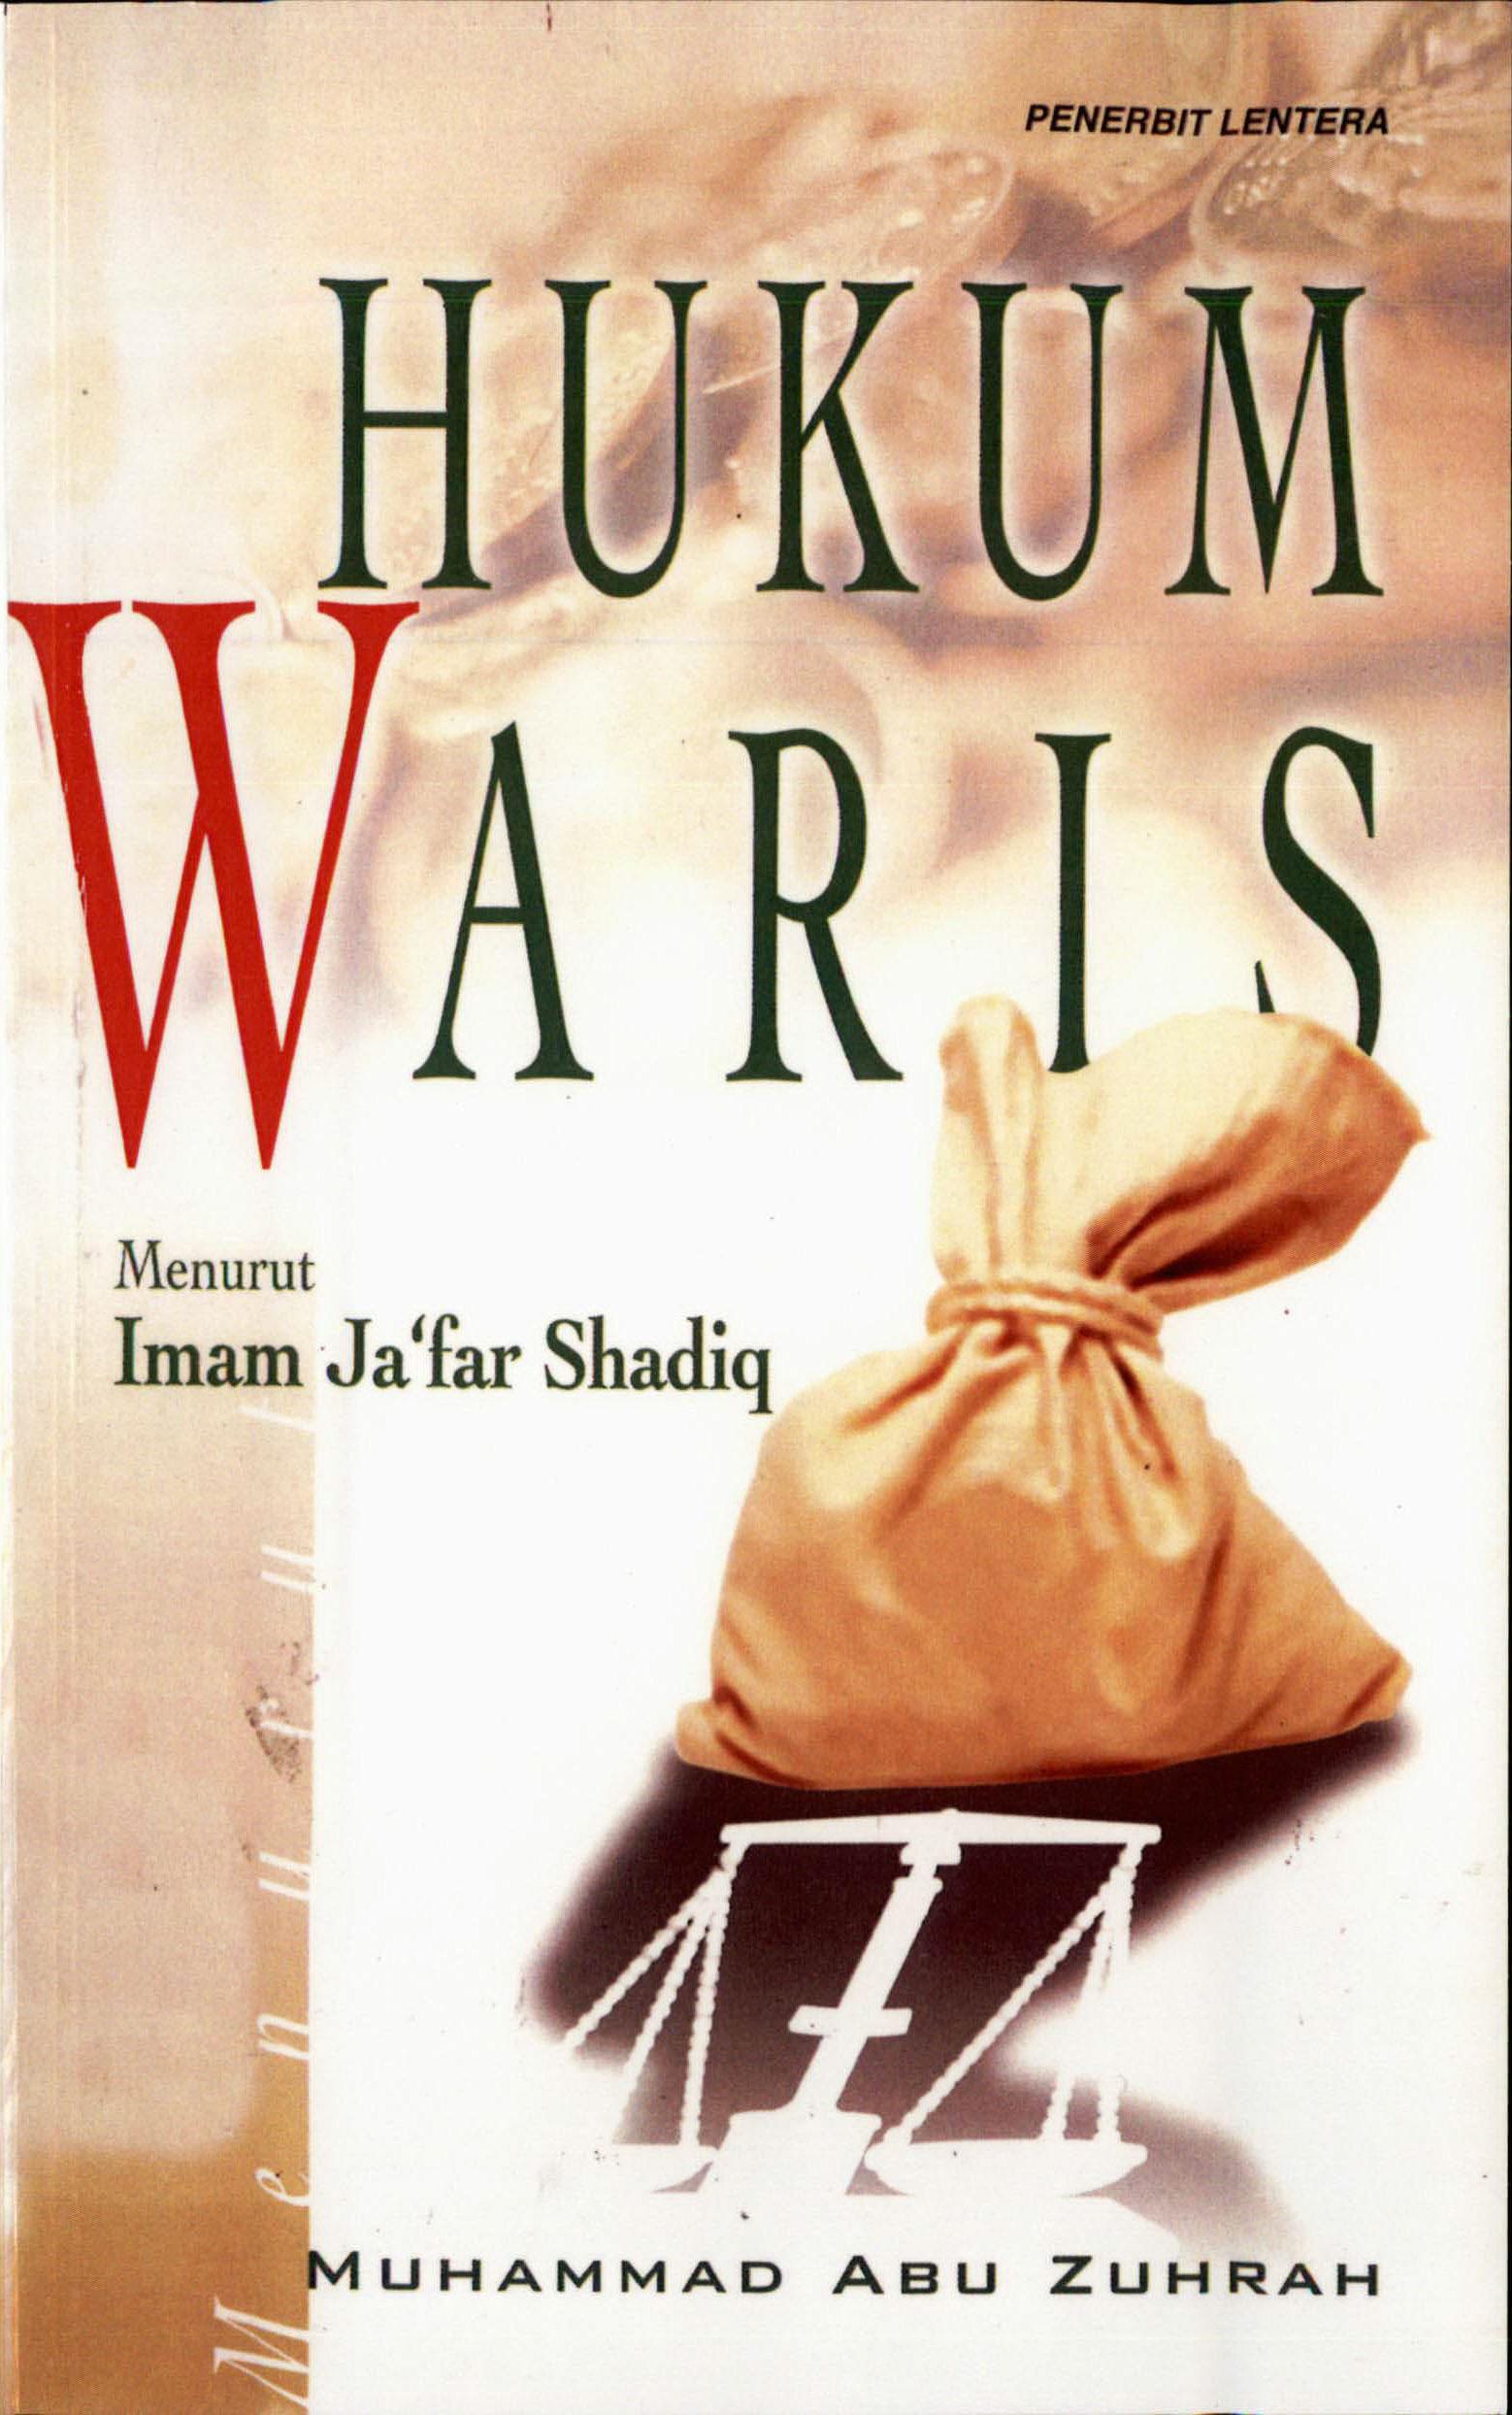 Hukum Waris Menurut Imam Ja'far Shadiq